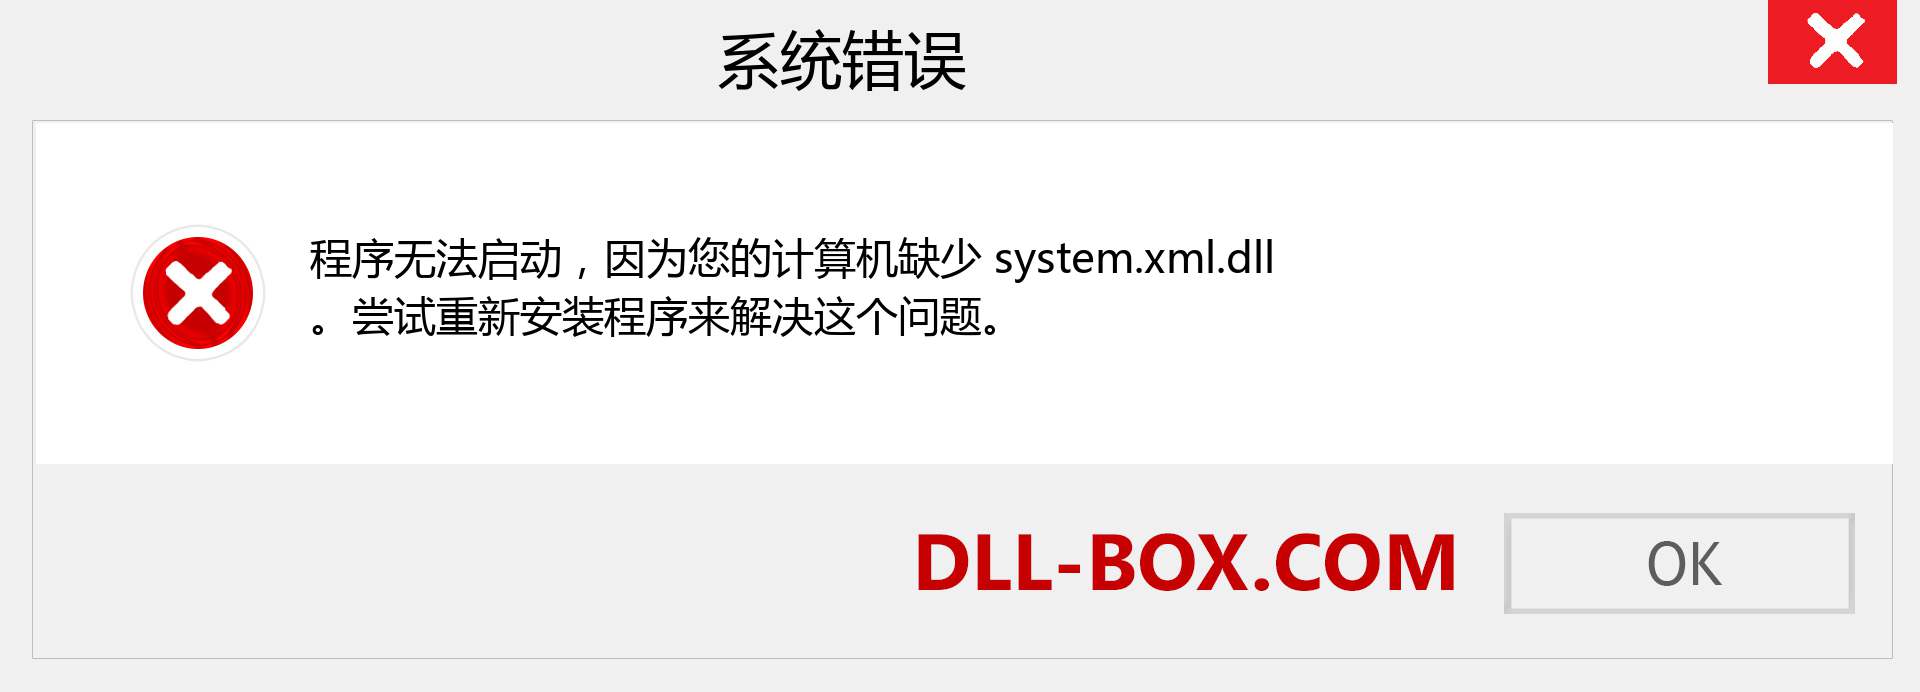 system.xml.dll 文件丢失？。 适用于 Windows 7、8、10 的下载 - 修复 Windows、照片、图像上的 system.xml dll 丢失错误